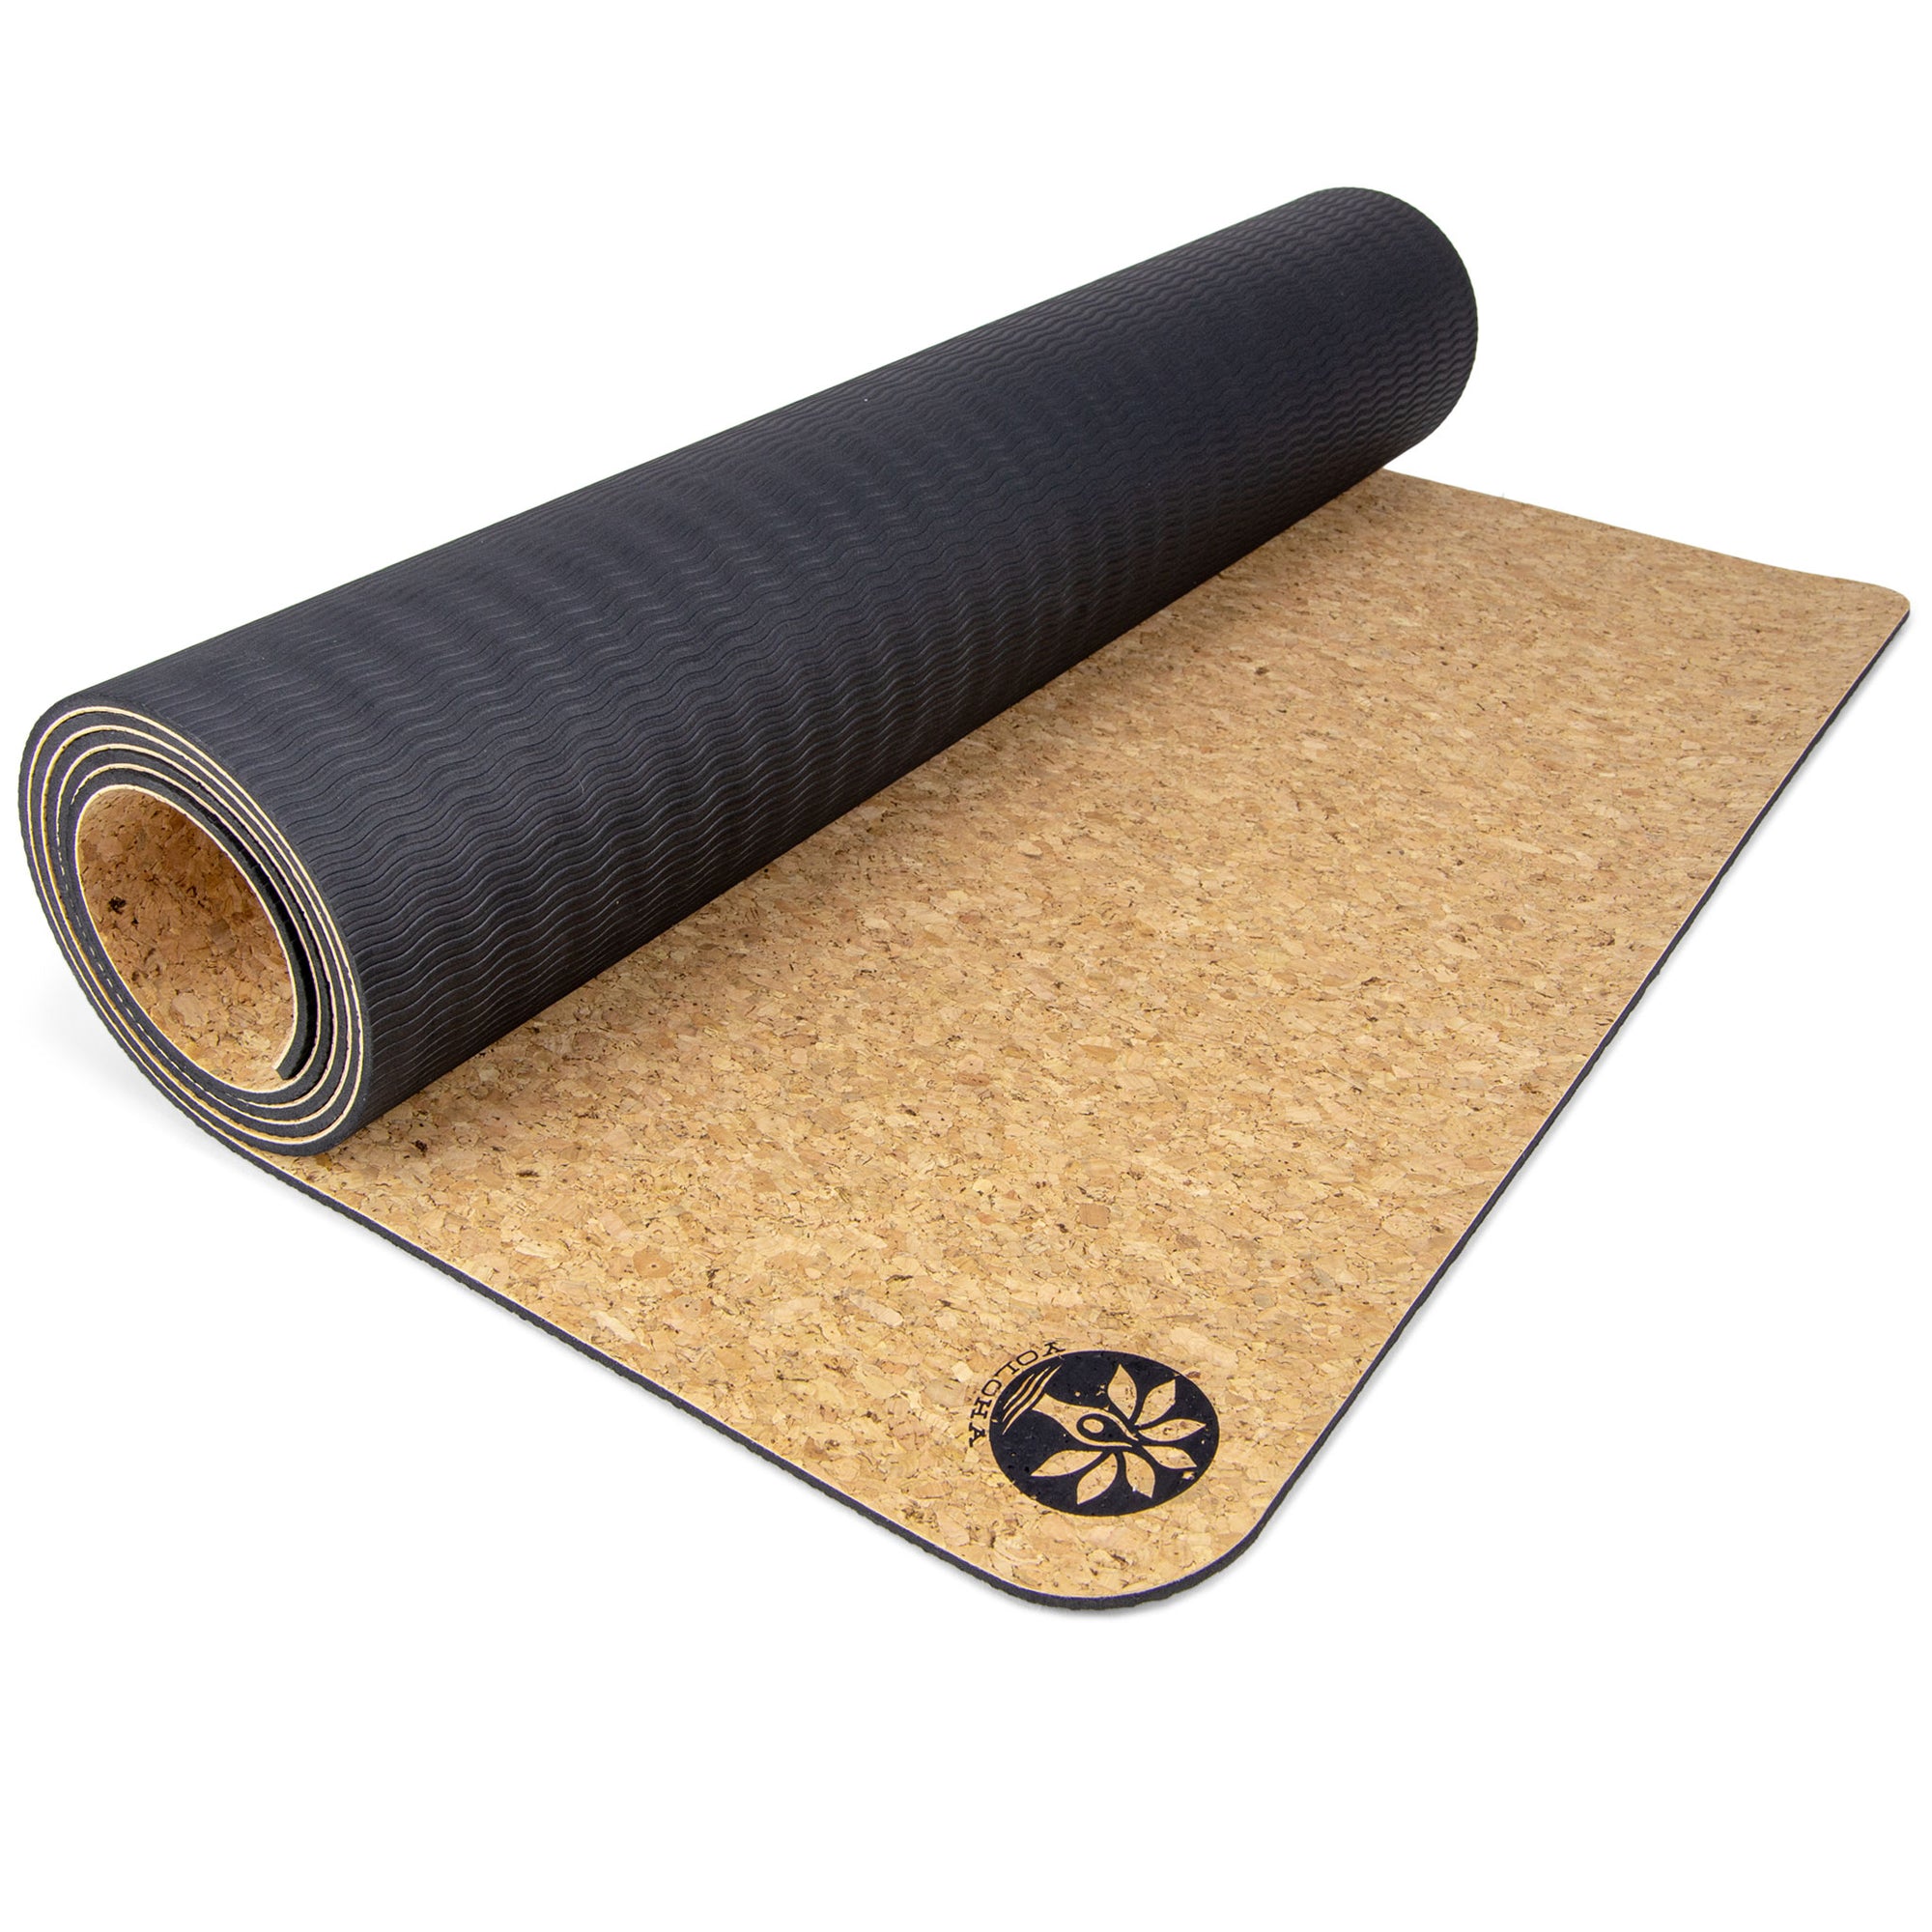  Yoga & Meditation Set Cork Yoga Mat - Beige Yoga Belt